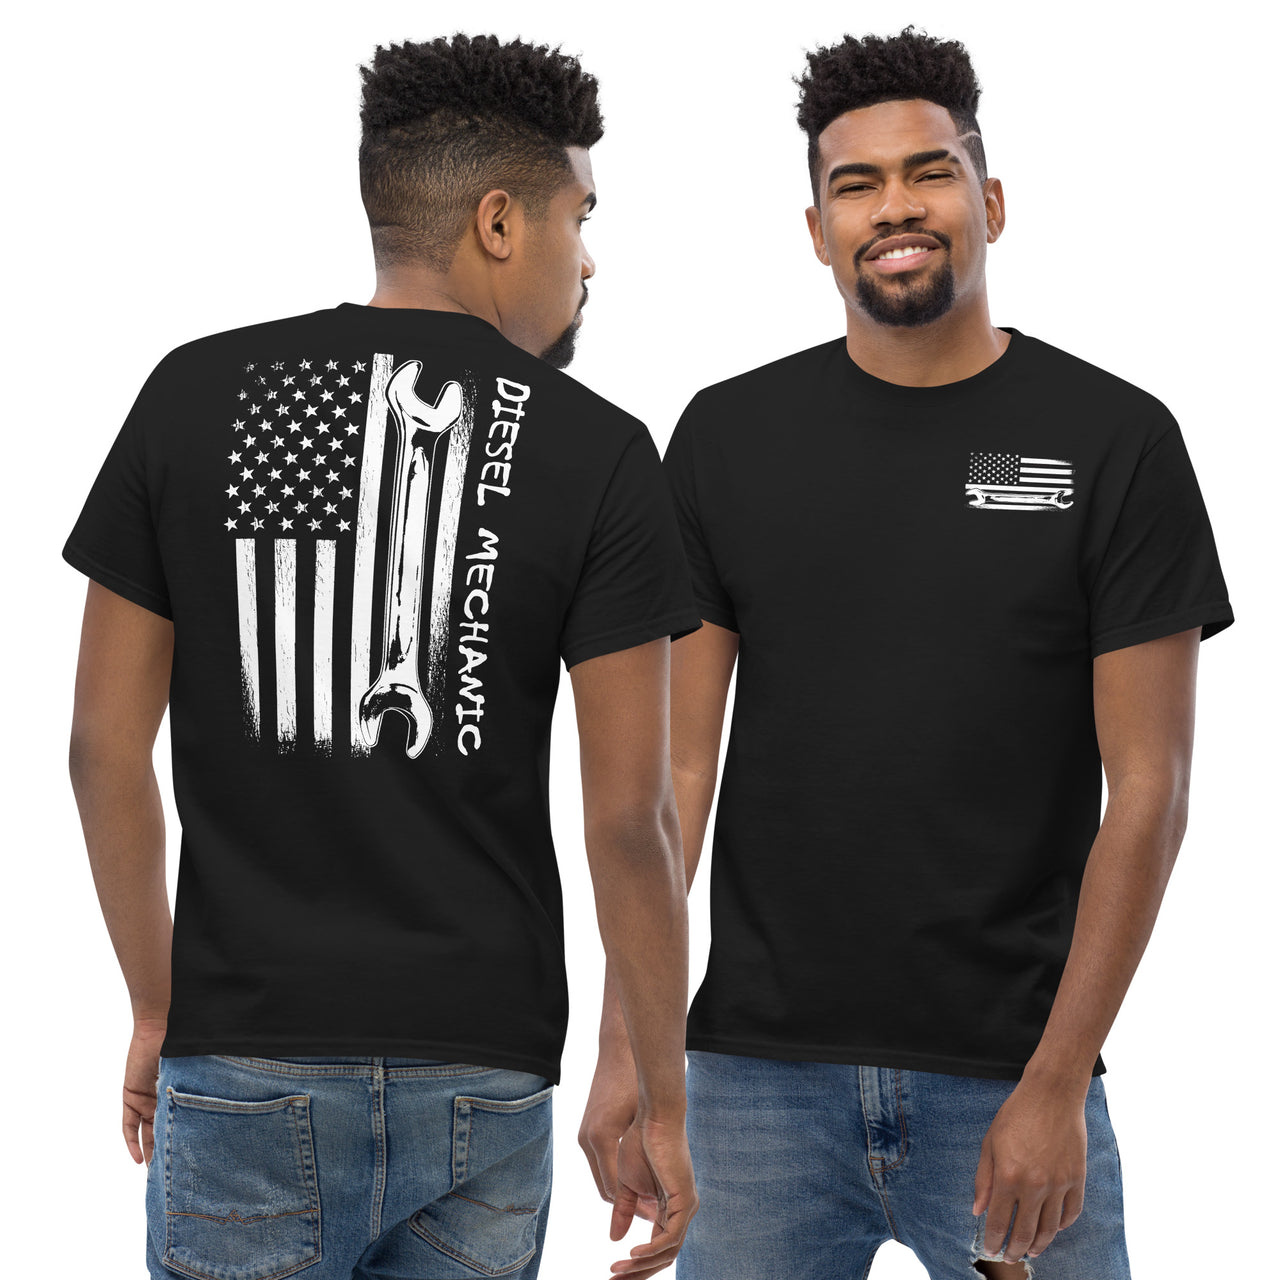 Diesel Mechanic American Flag T-Shirt modeled in black